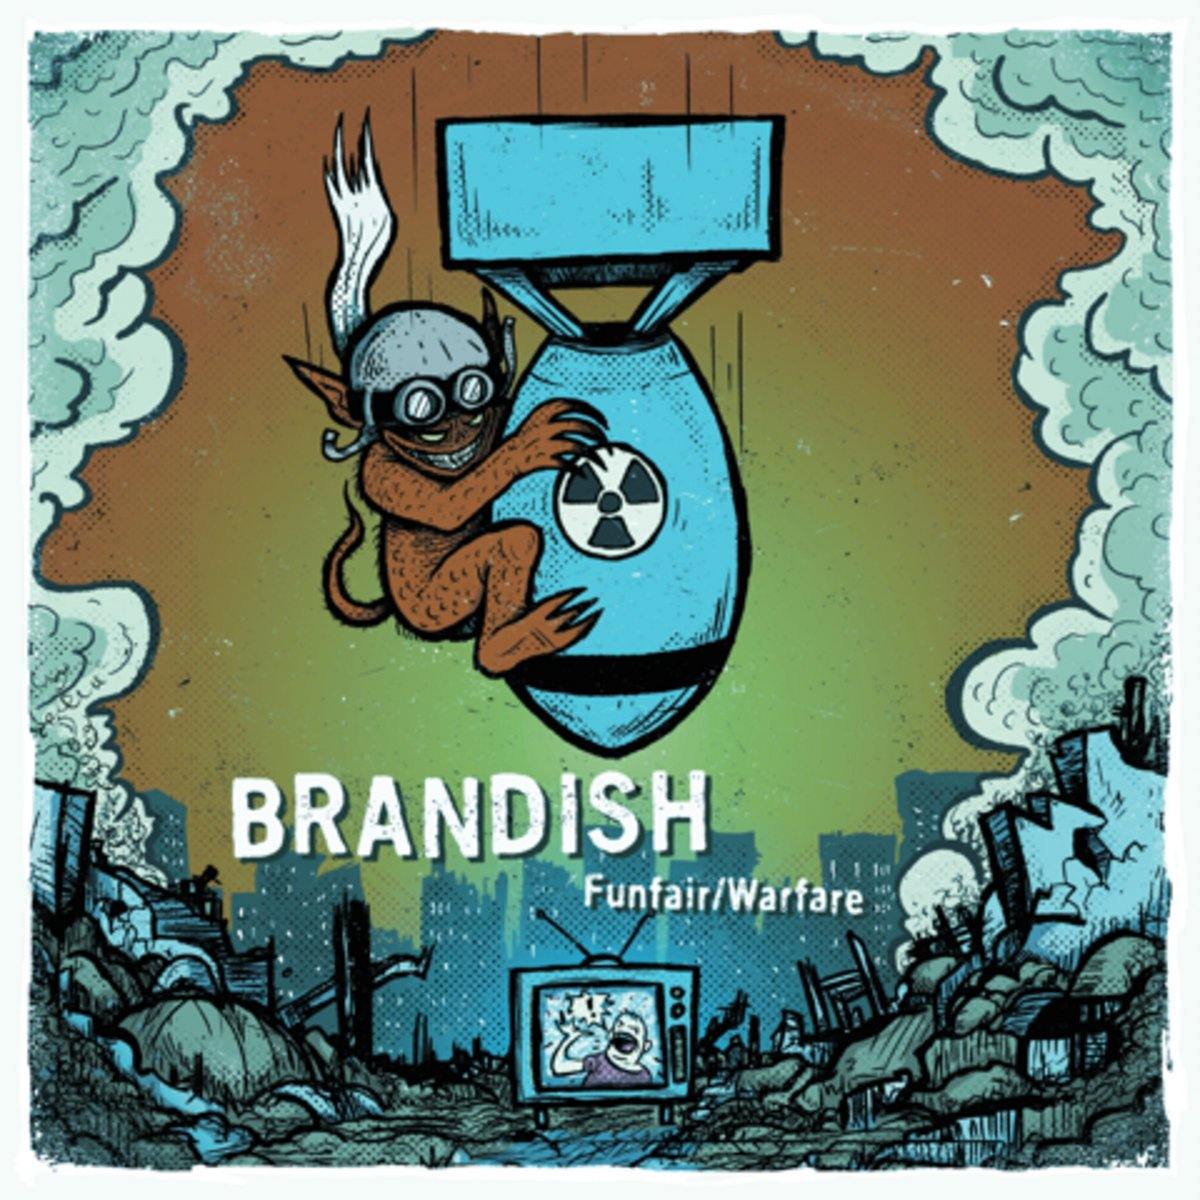 Buy – Brandish "Funfair / Warfare" CD – Band & Music Merch – Cold Cuts Merch